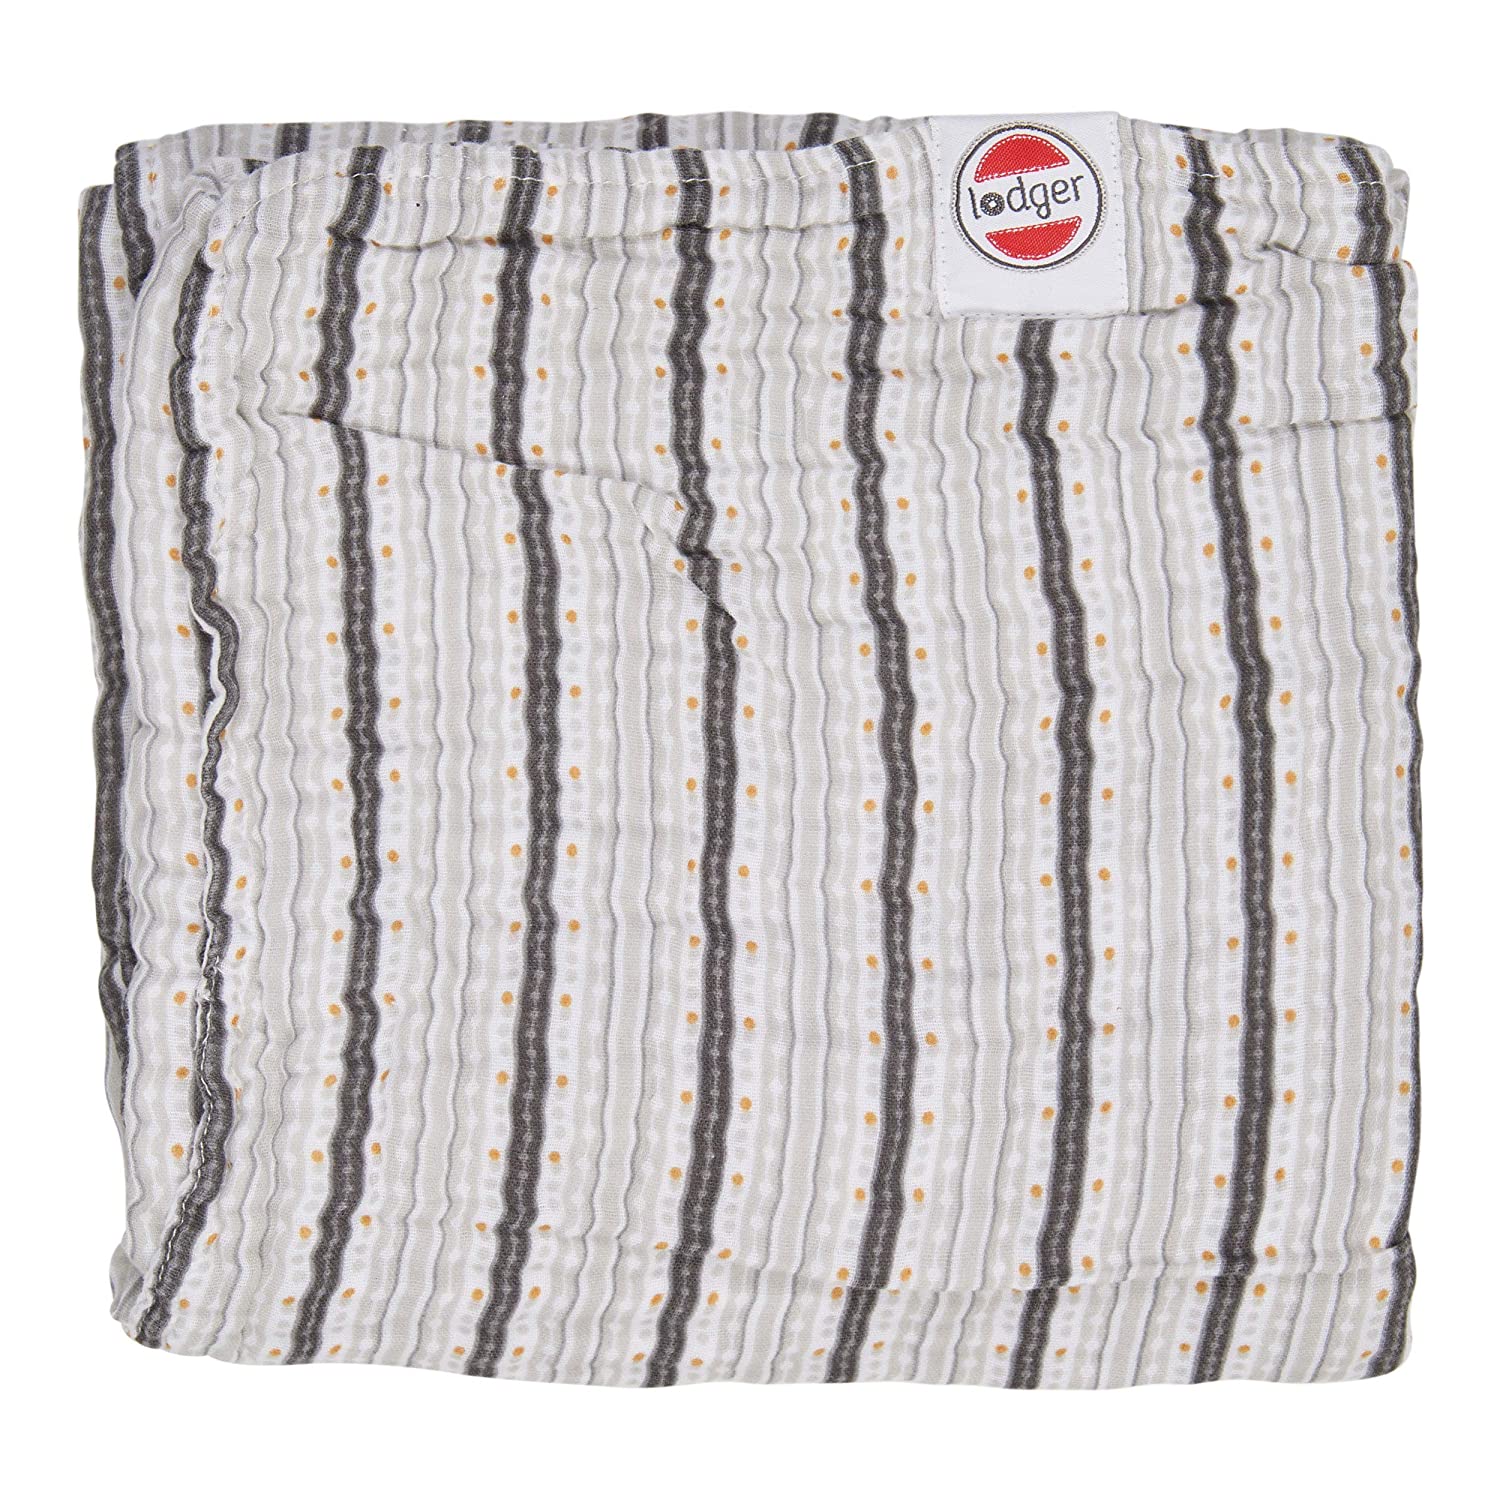 Lodger DM6.7.002 052 120 Dreamer Xandu Stripe Baby Blanket, 120 x 120 cm, Grey